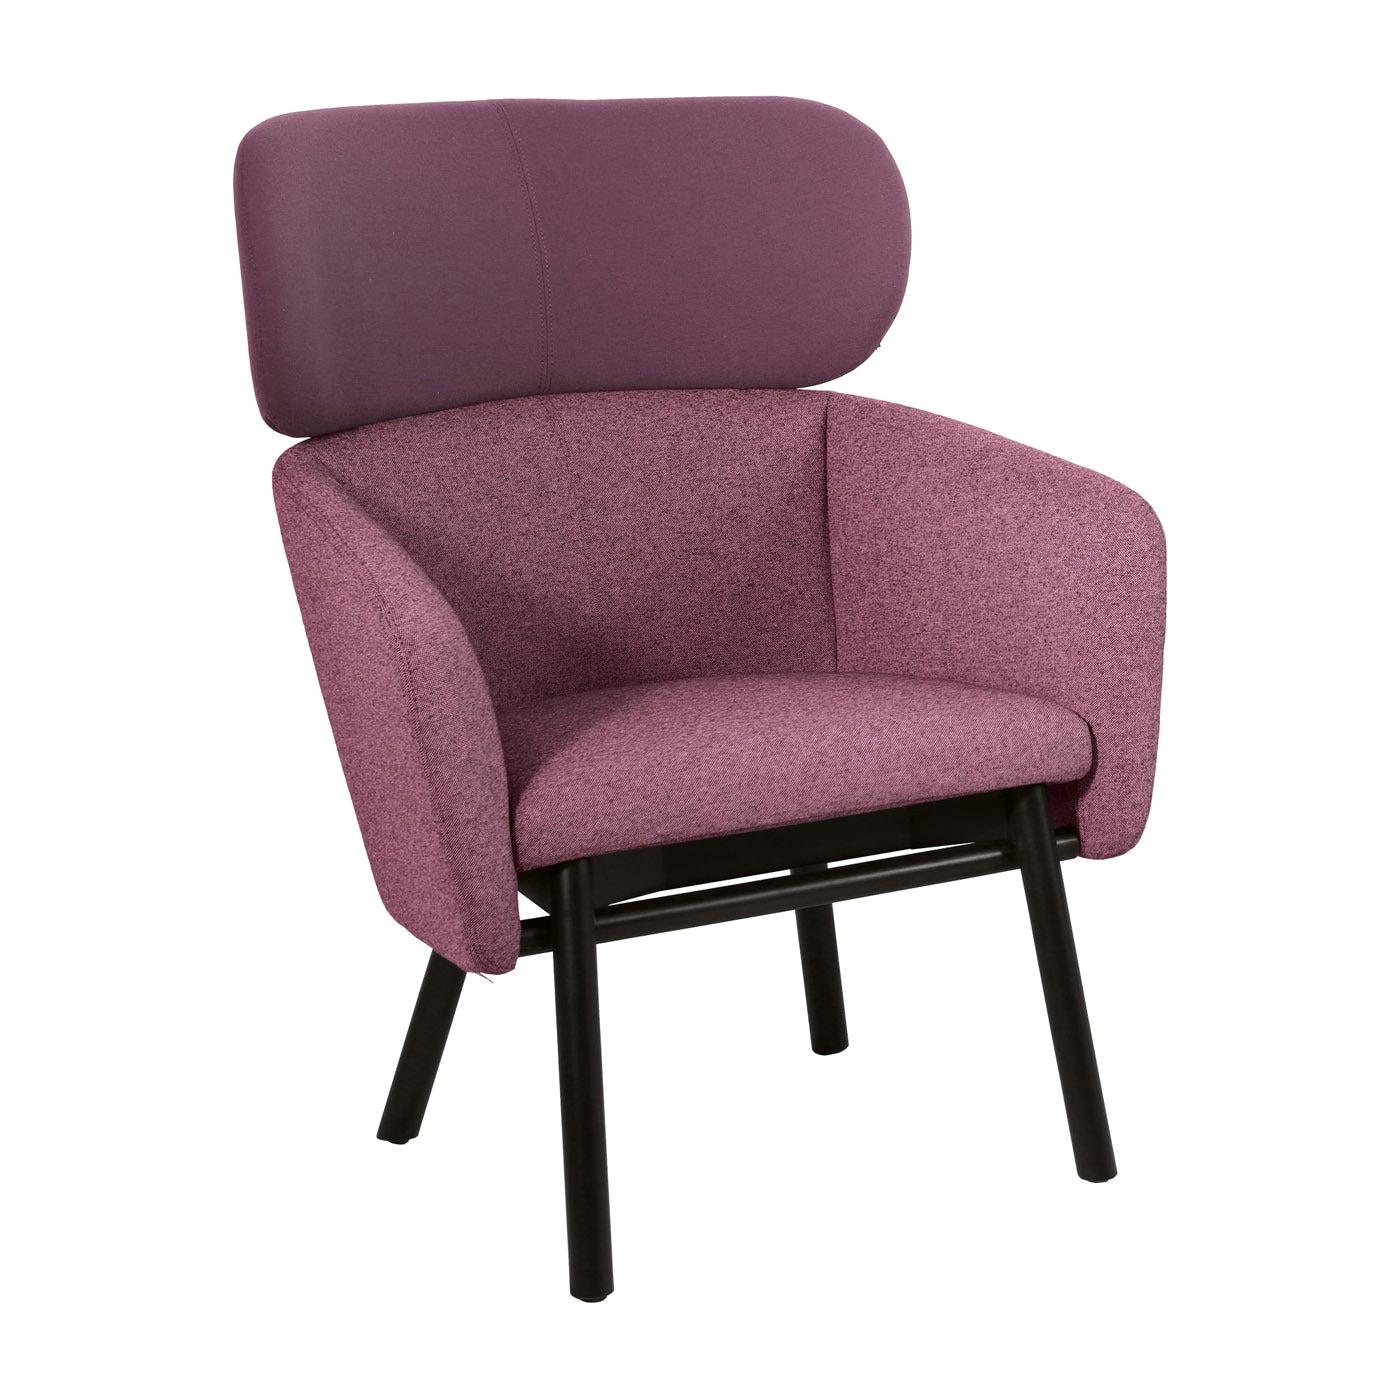 Balù Lounge Lilac Chair by Emilio Nanni